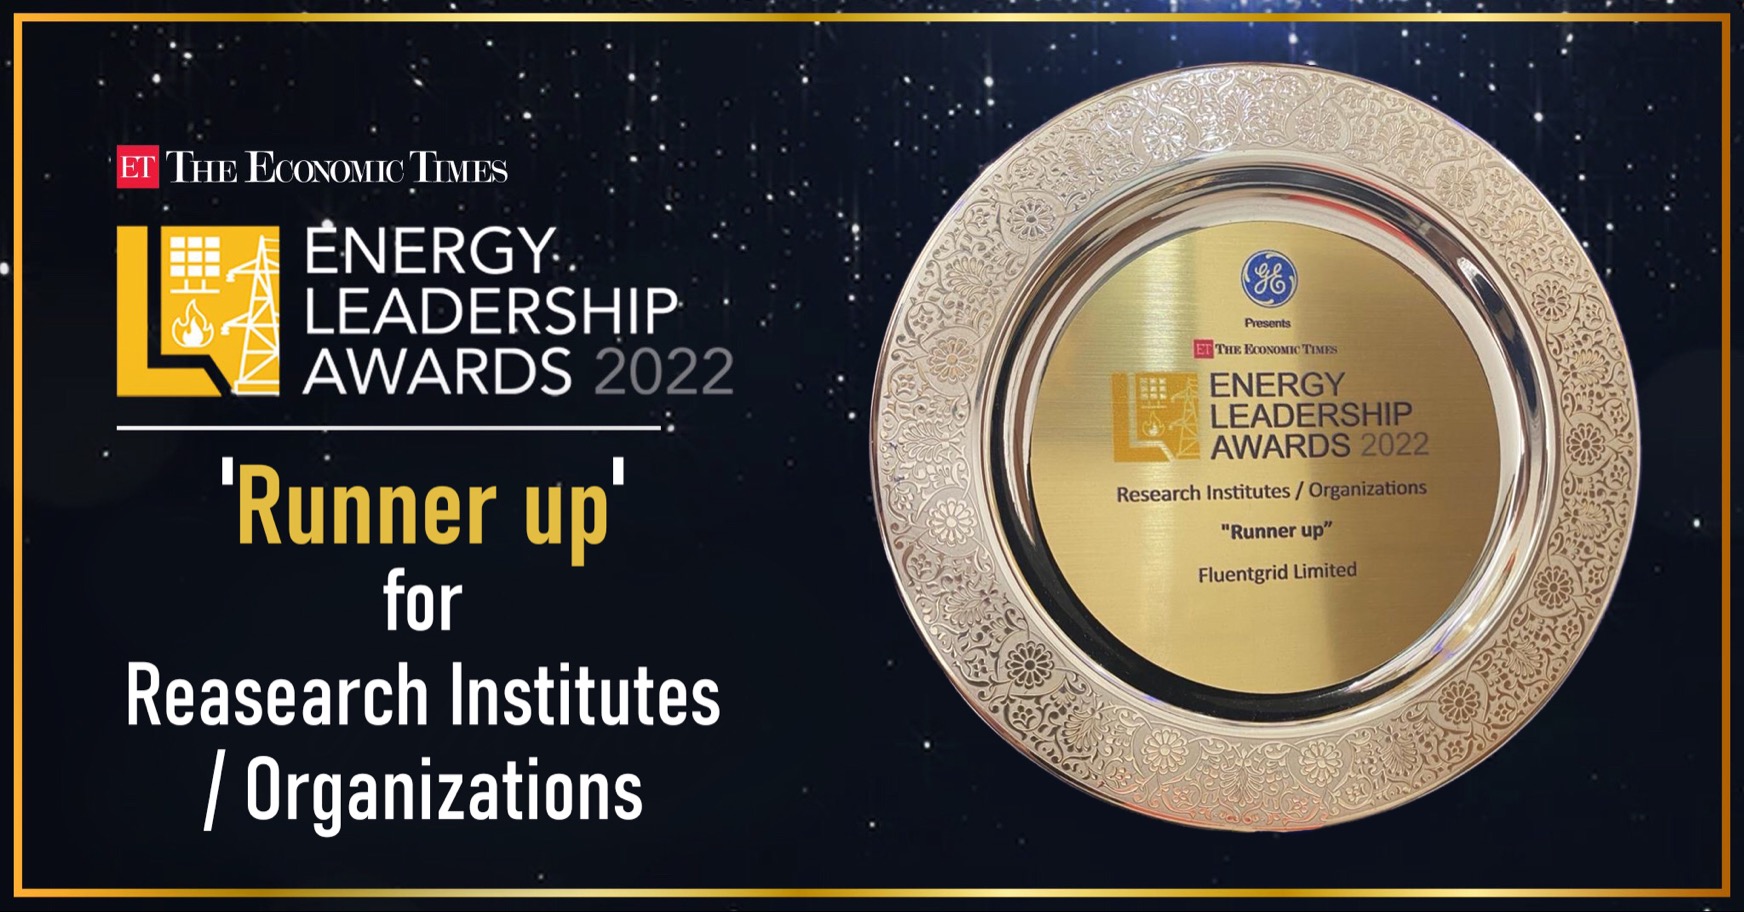 ET Energy Leadership